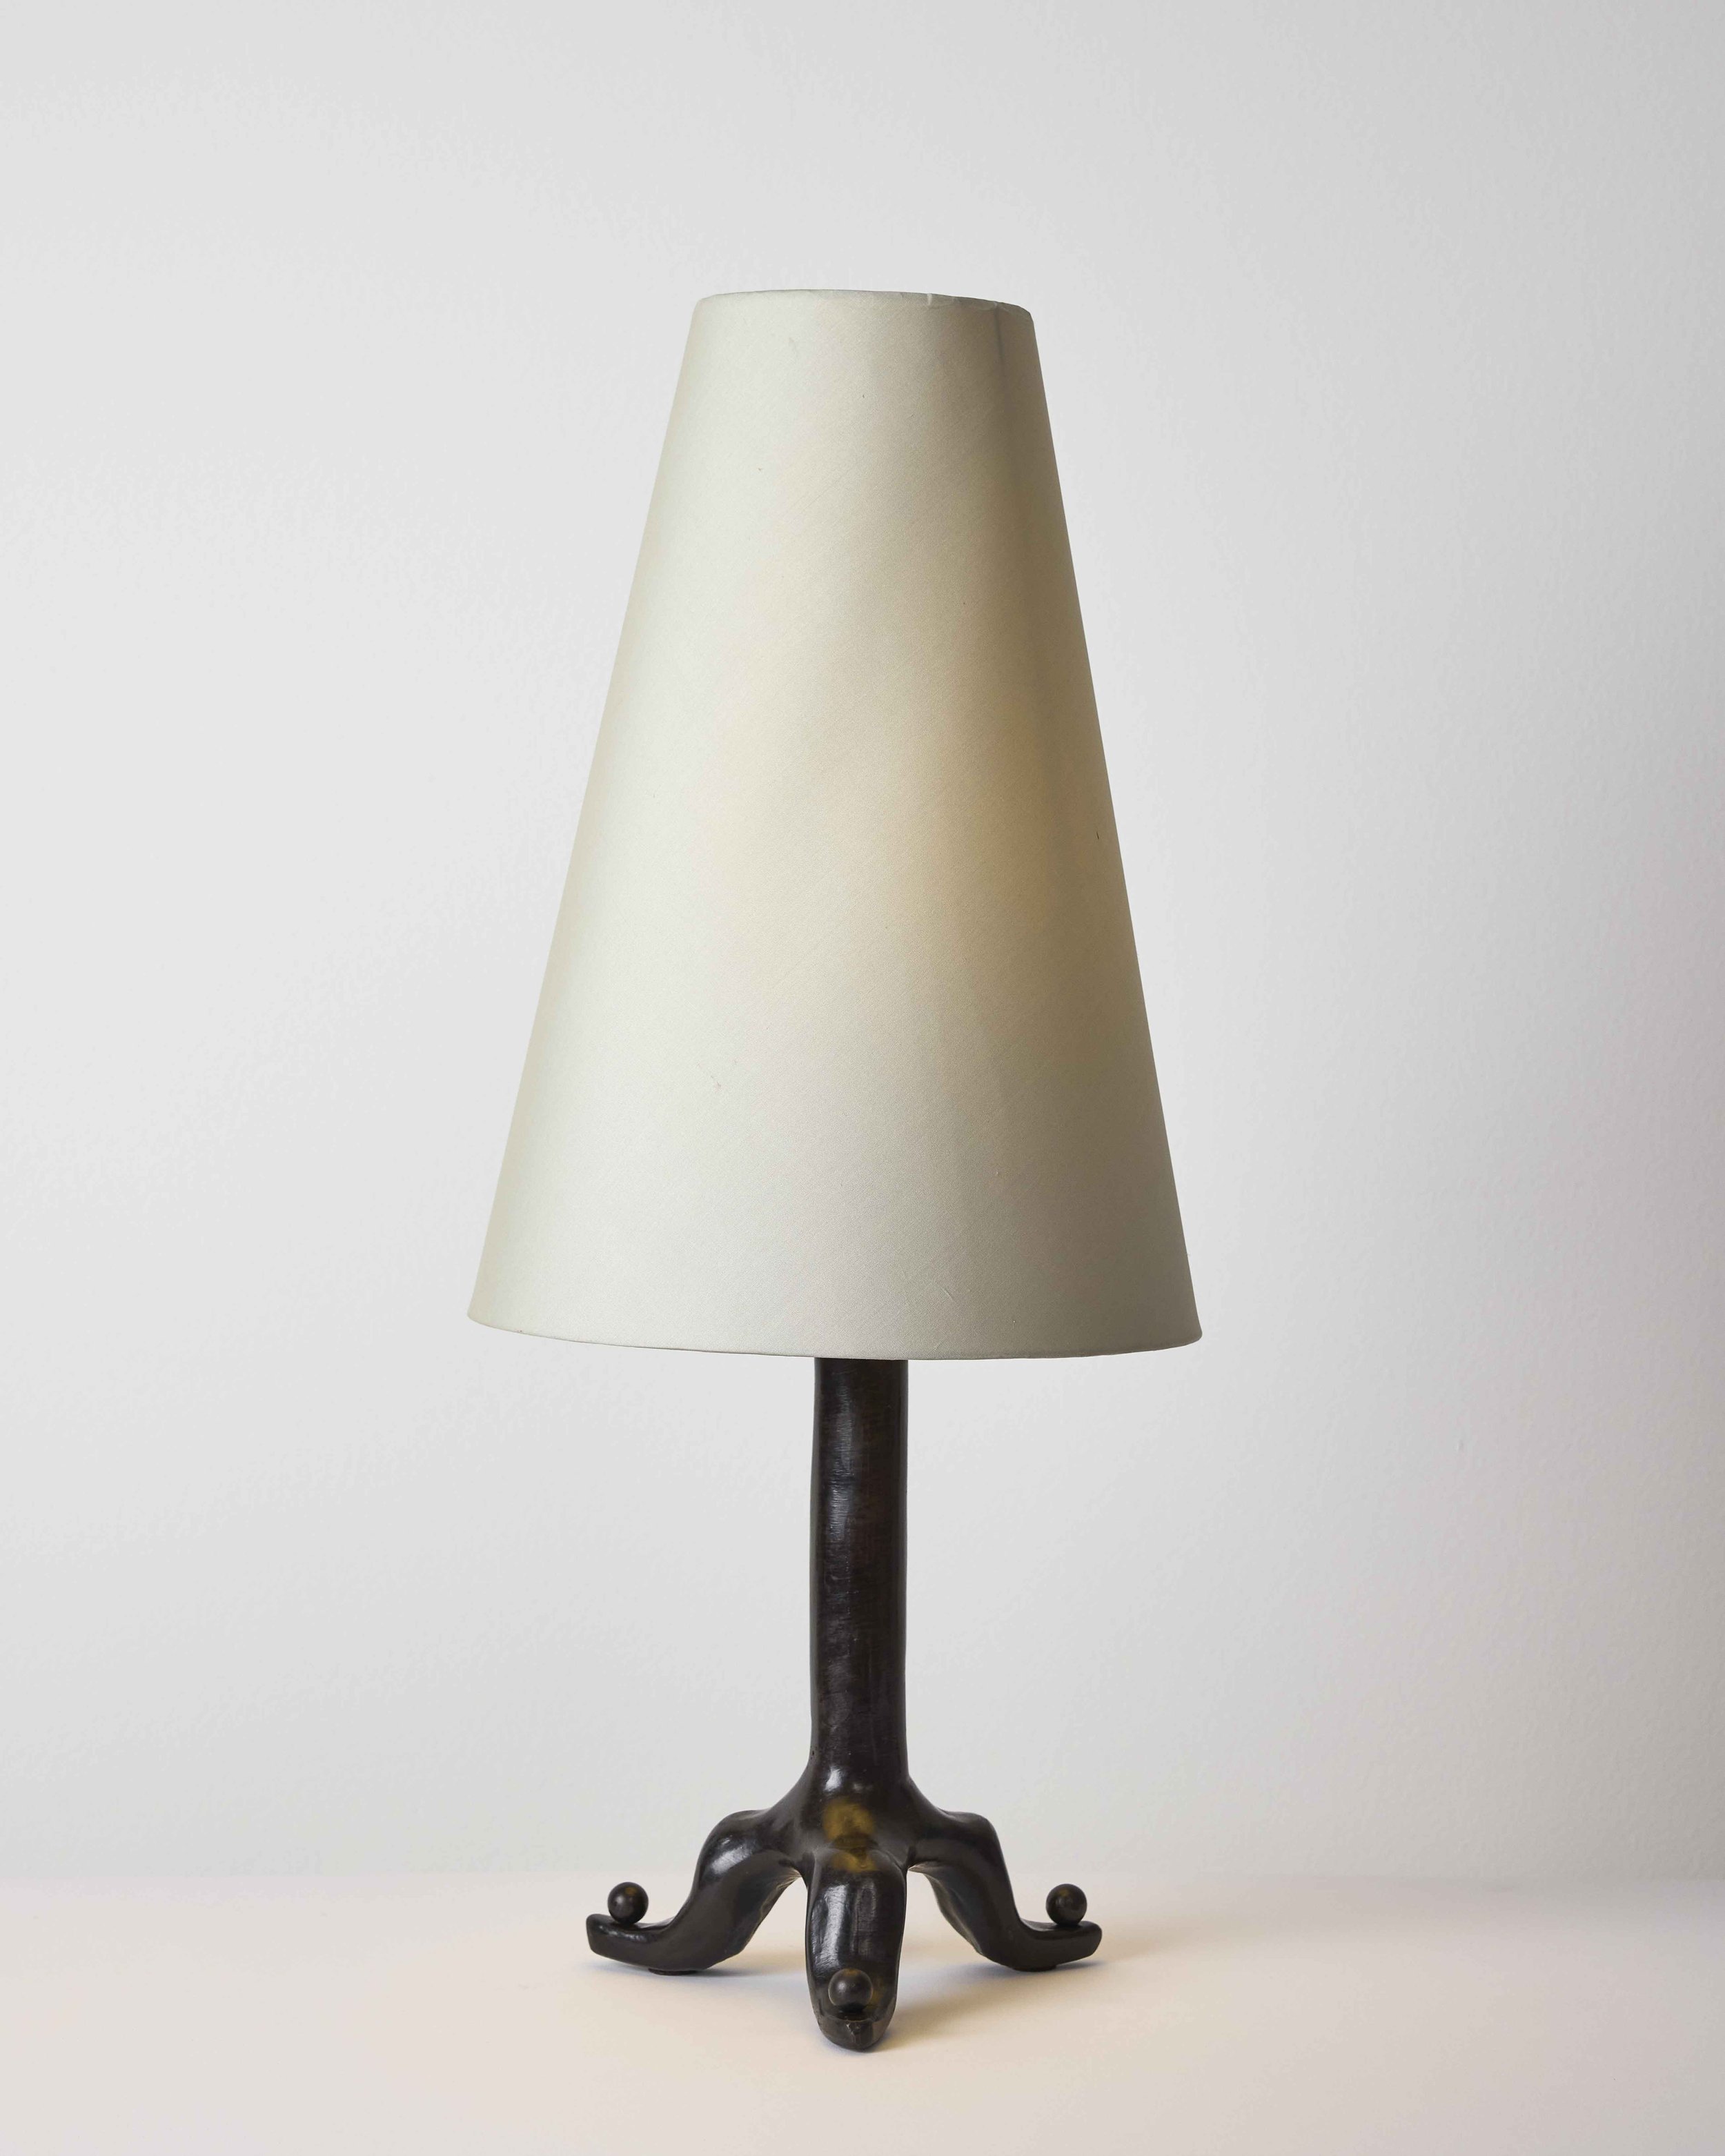 1.B&G Table Lamp 'Belgravia'.jpg